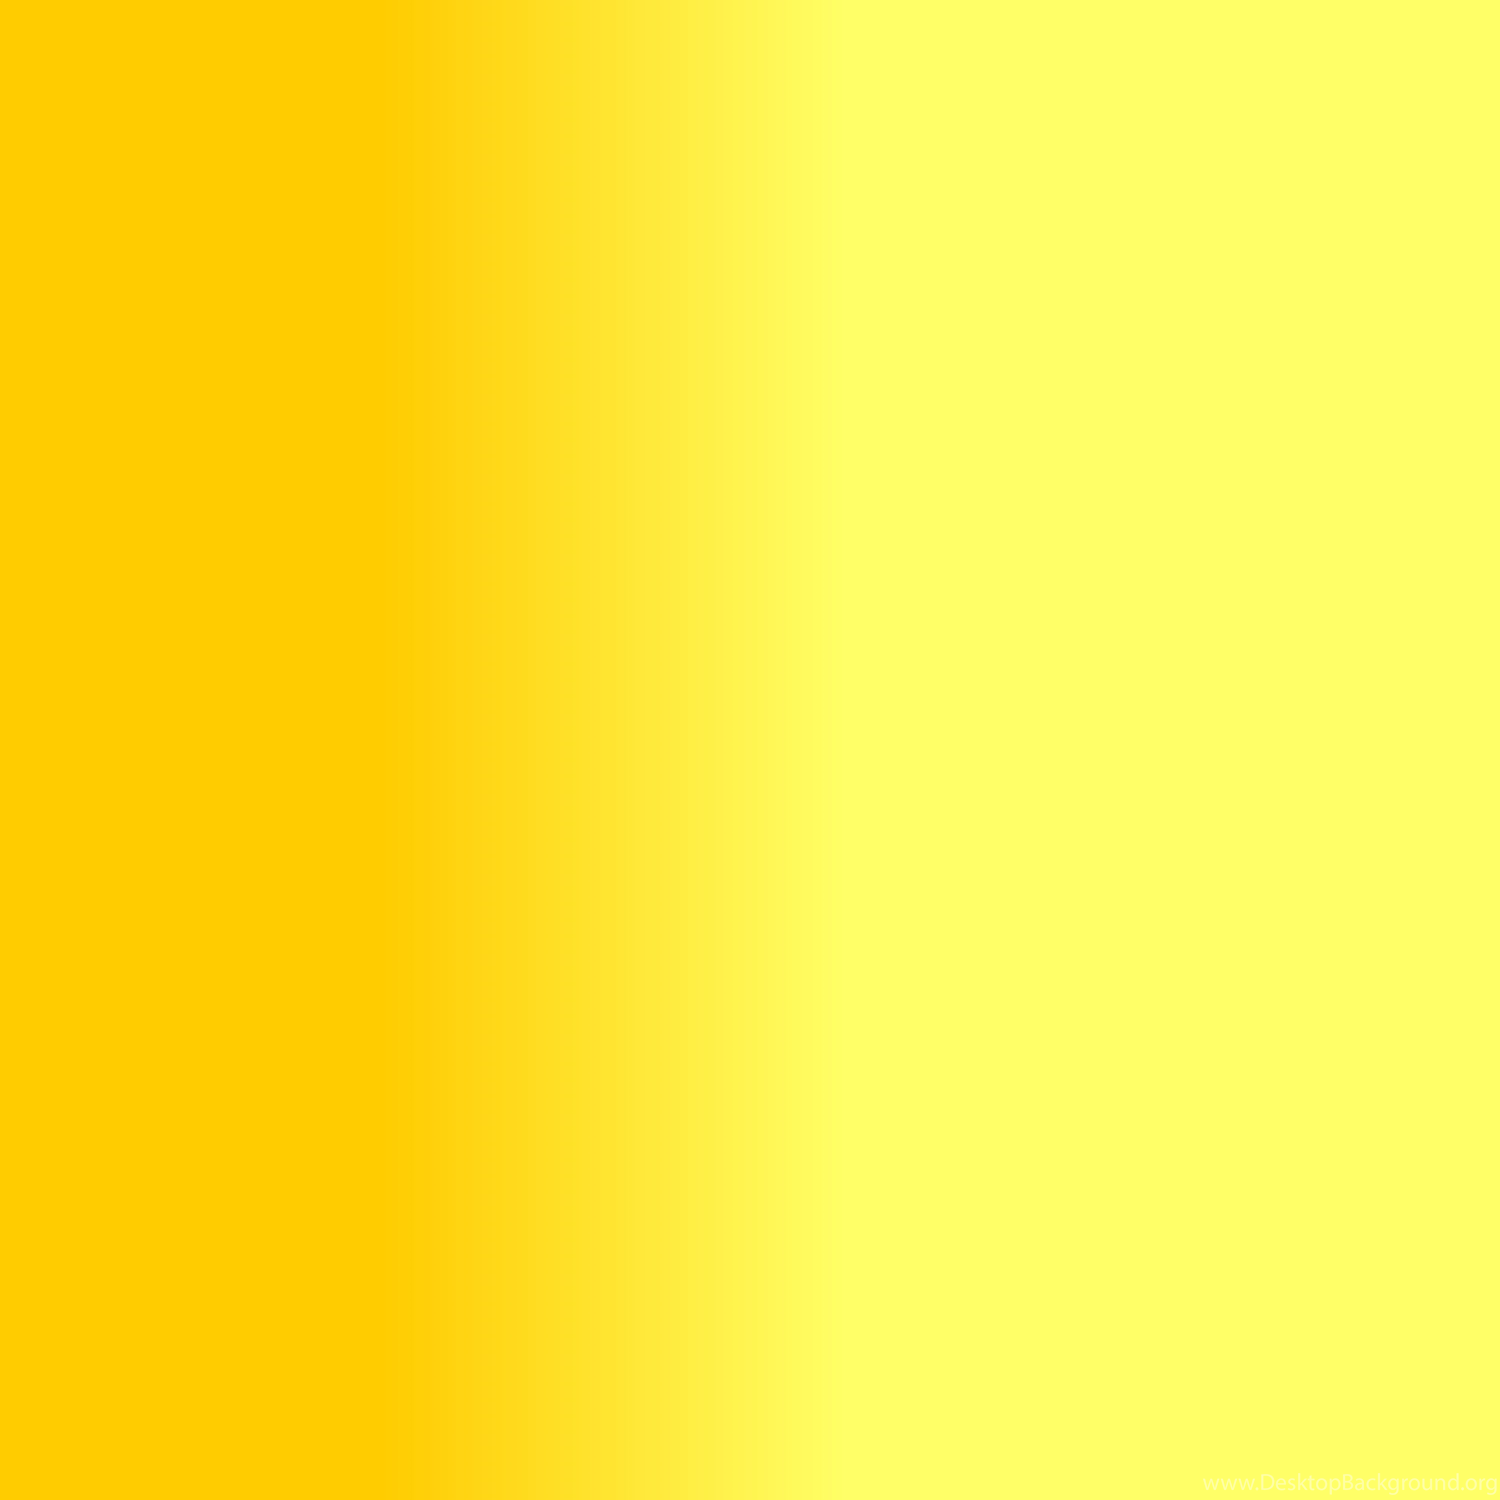 Темно желтая краска. Желтый цвет. X`KNSQ CDYTN. Желтый фон. Желто золотой цвет.